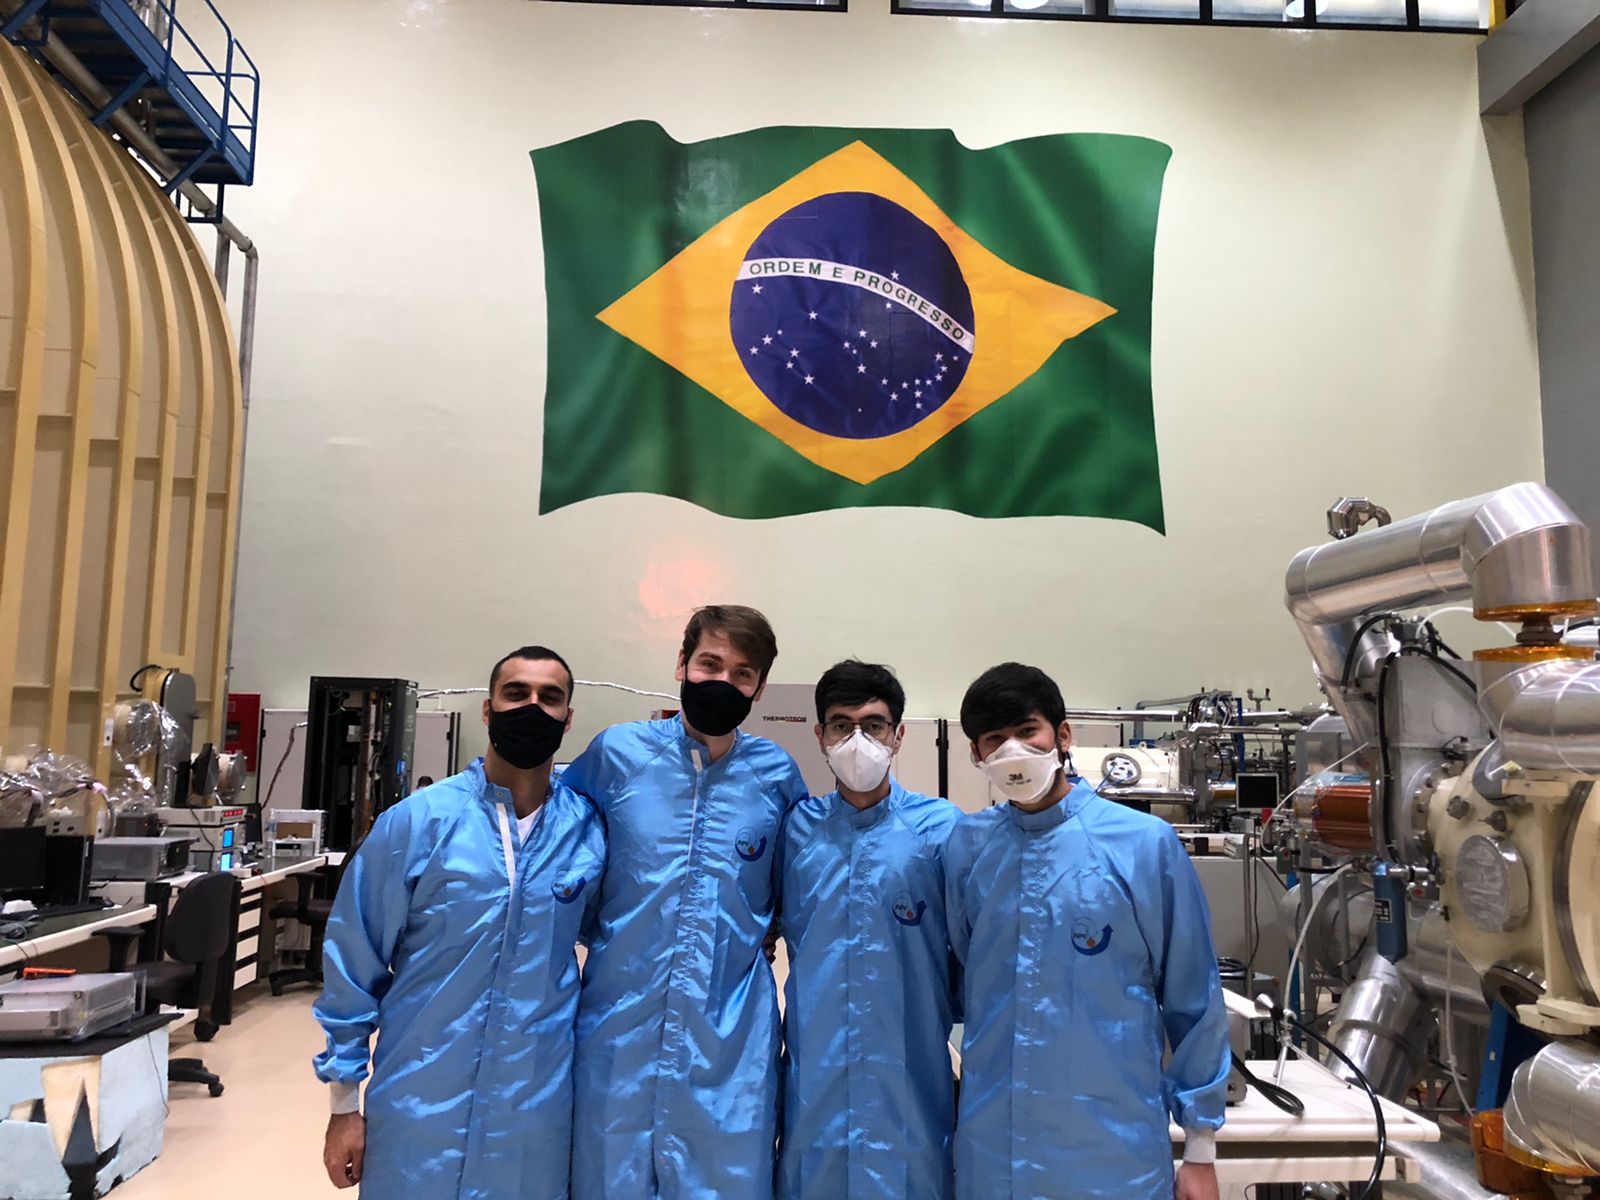 Elon musk - satélite - startup brasileira - SpaceX